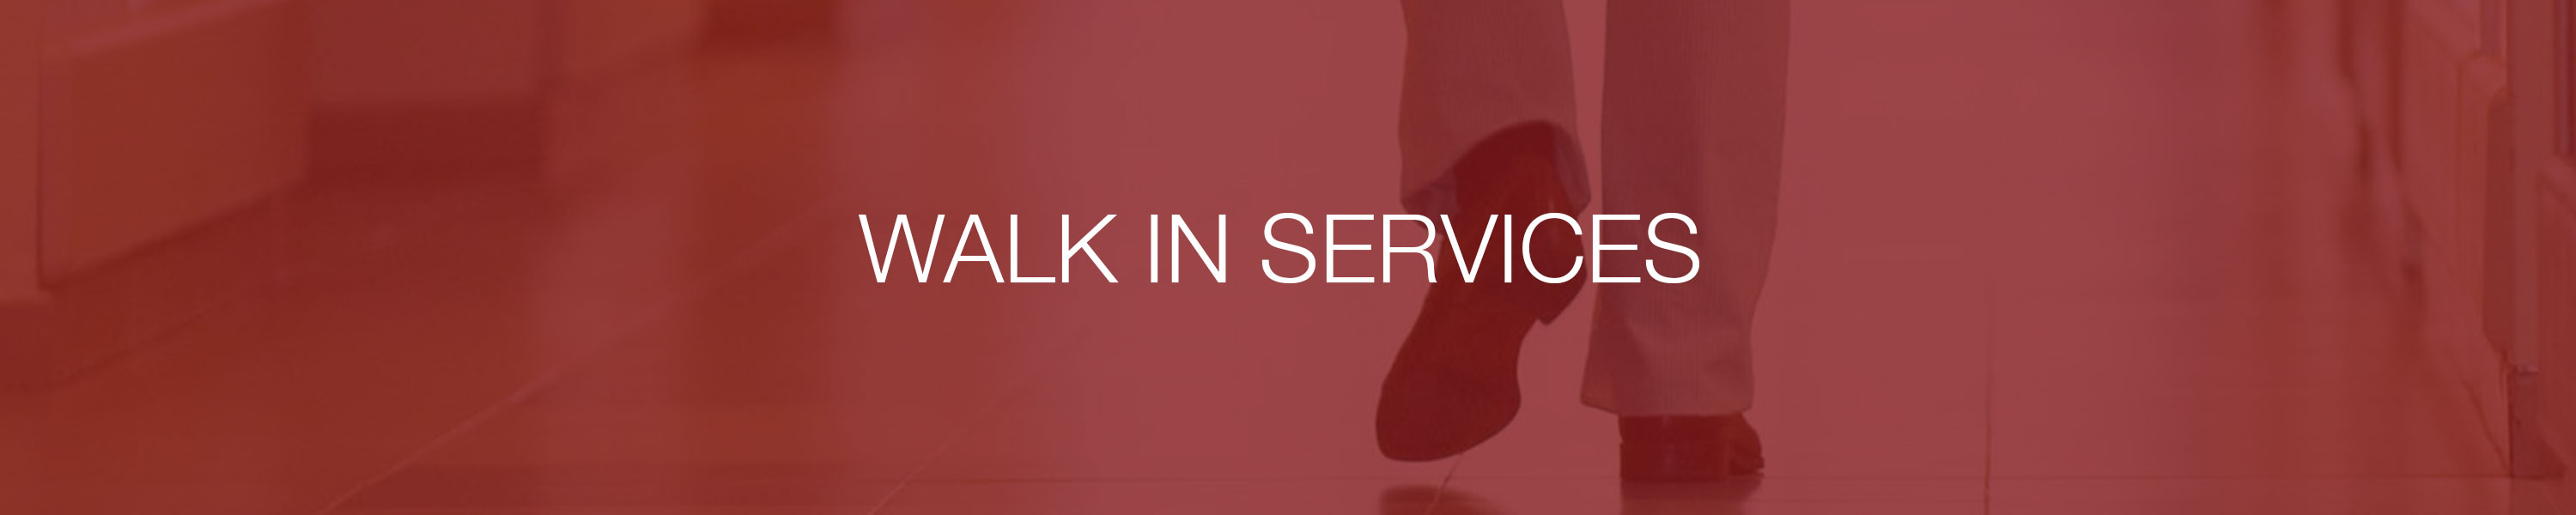 Walk In Services